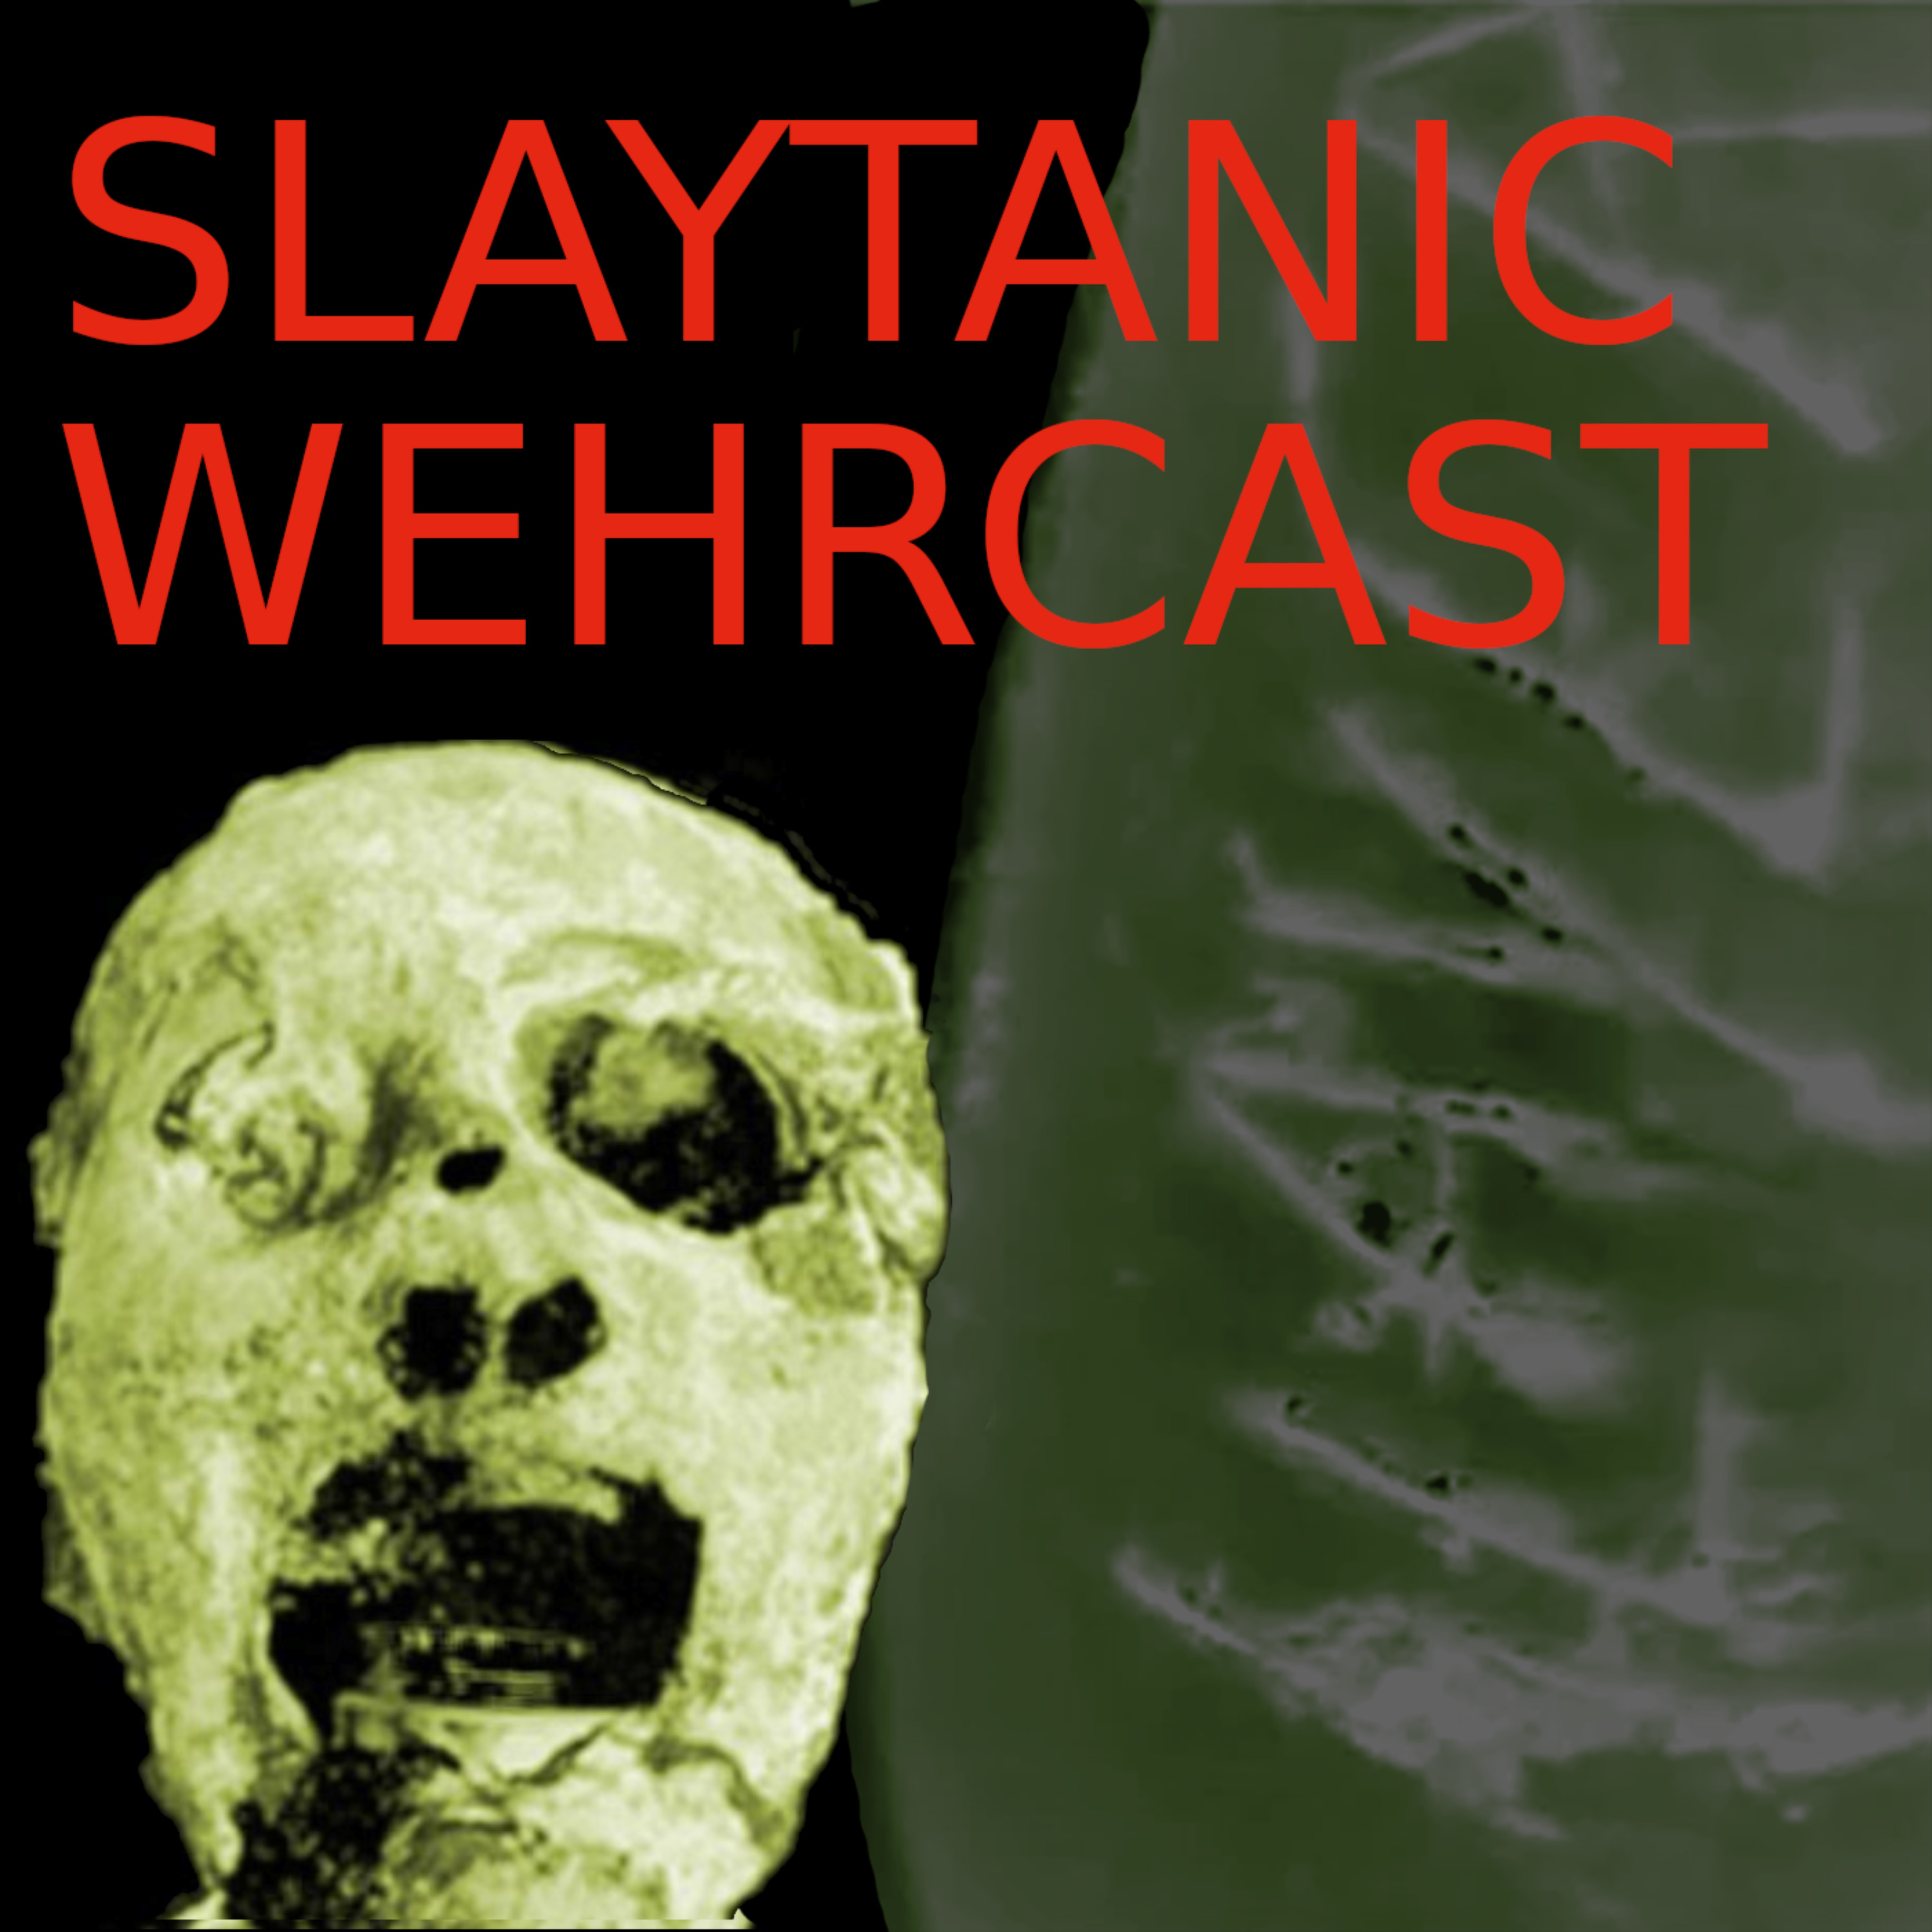 Slaytanic Wehrcast: A Slayer Podcast